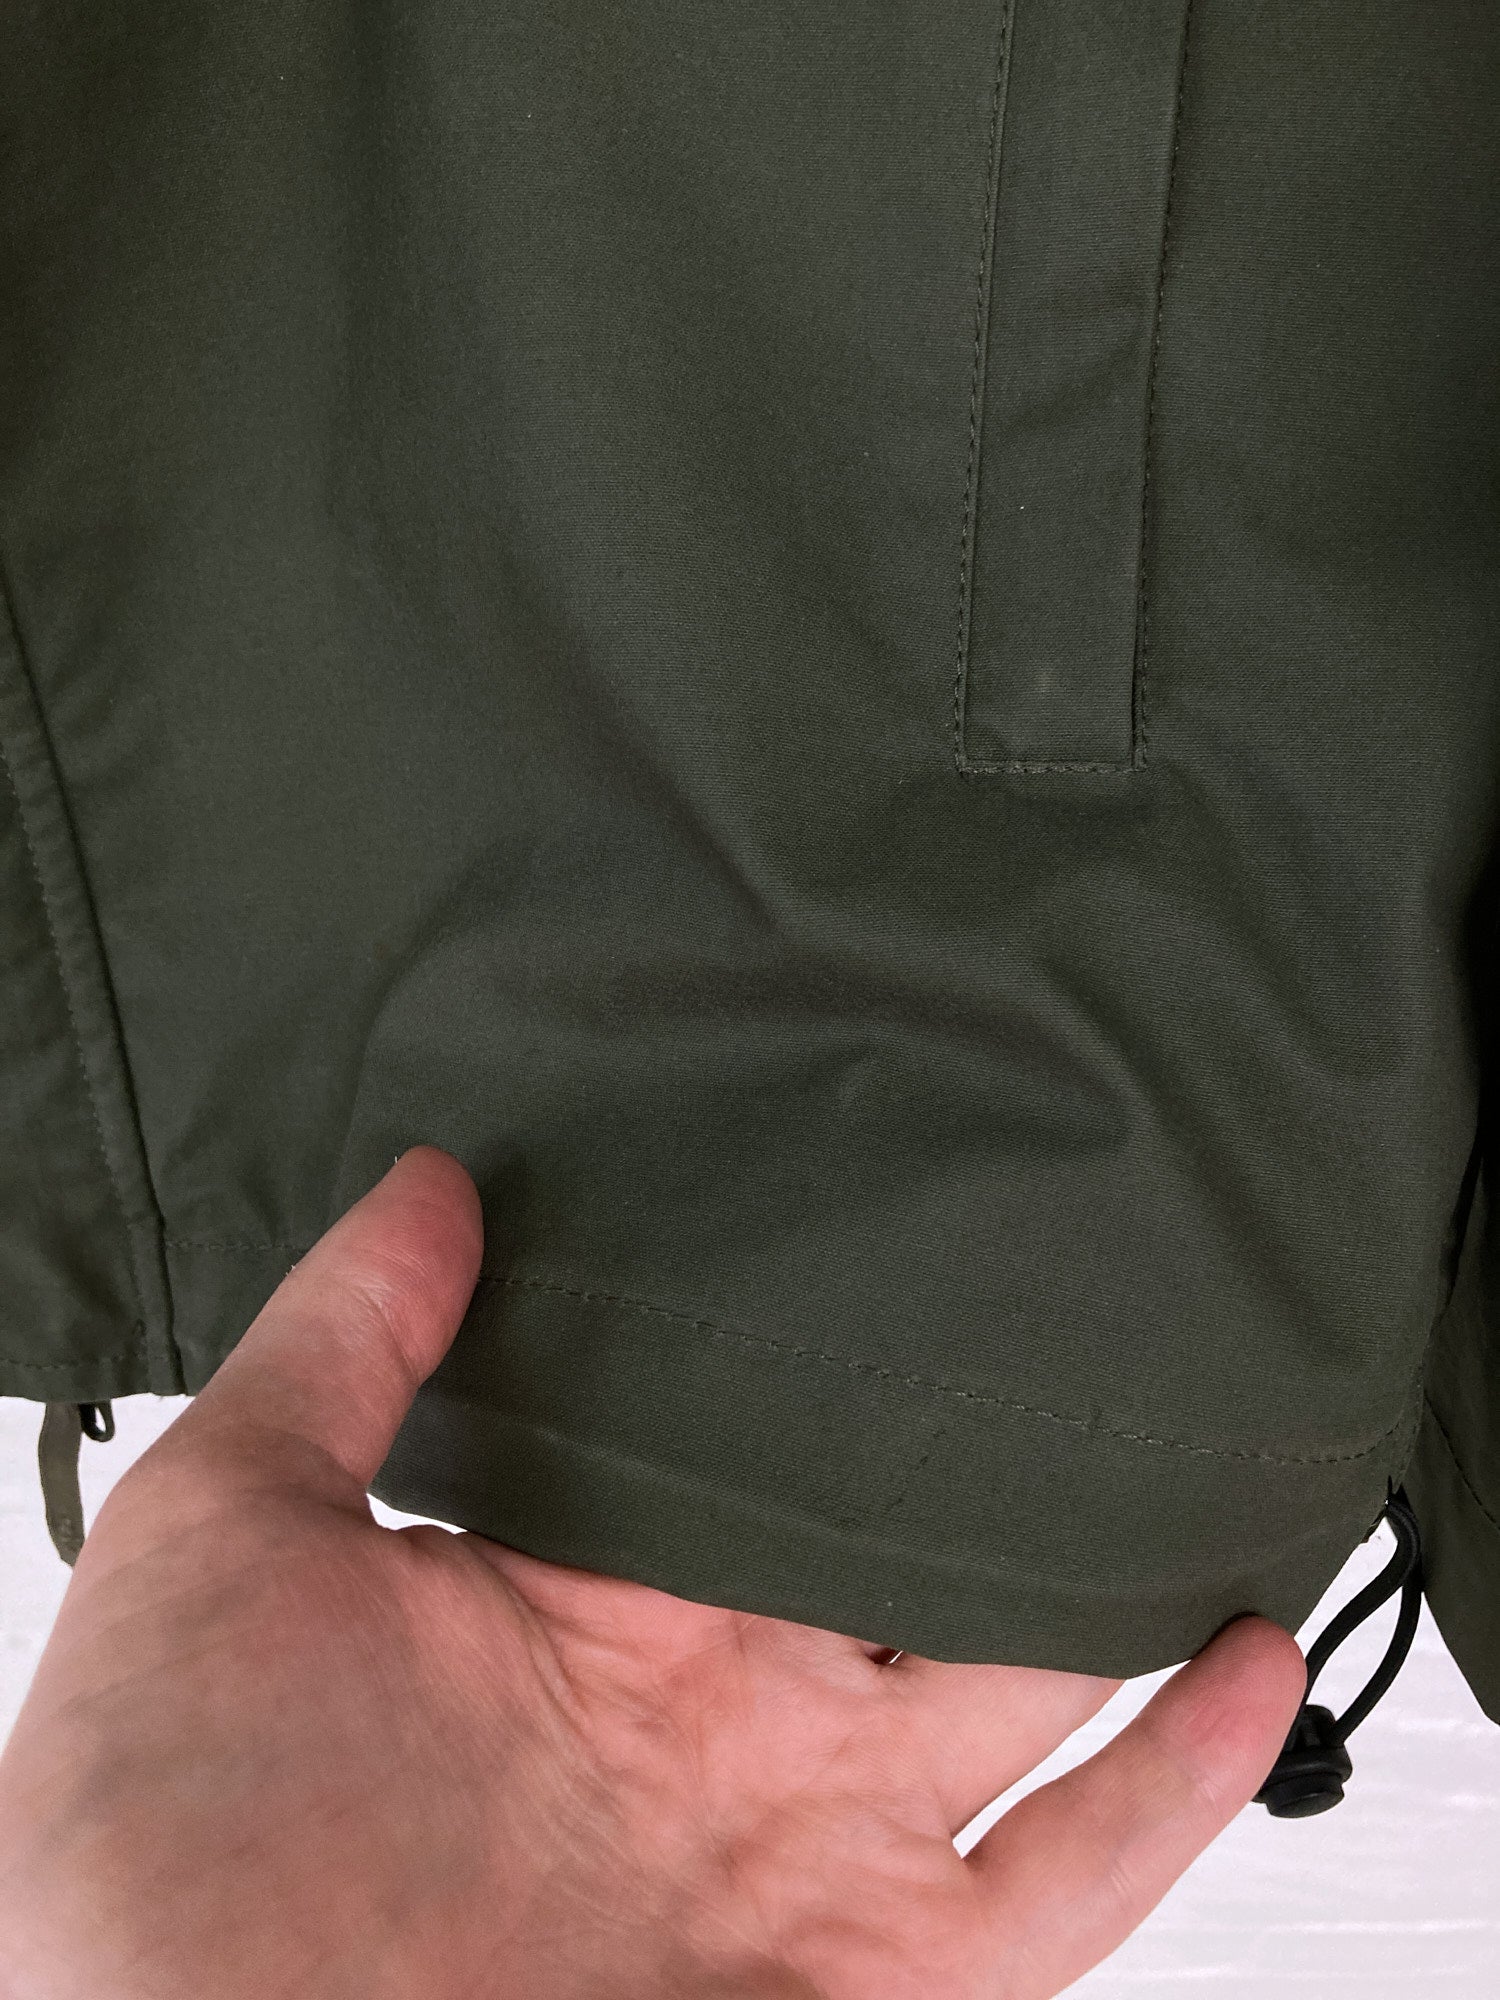 Christophe Lemaire khaki cotton canvas high neck hooded jacket - 1 S XS